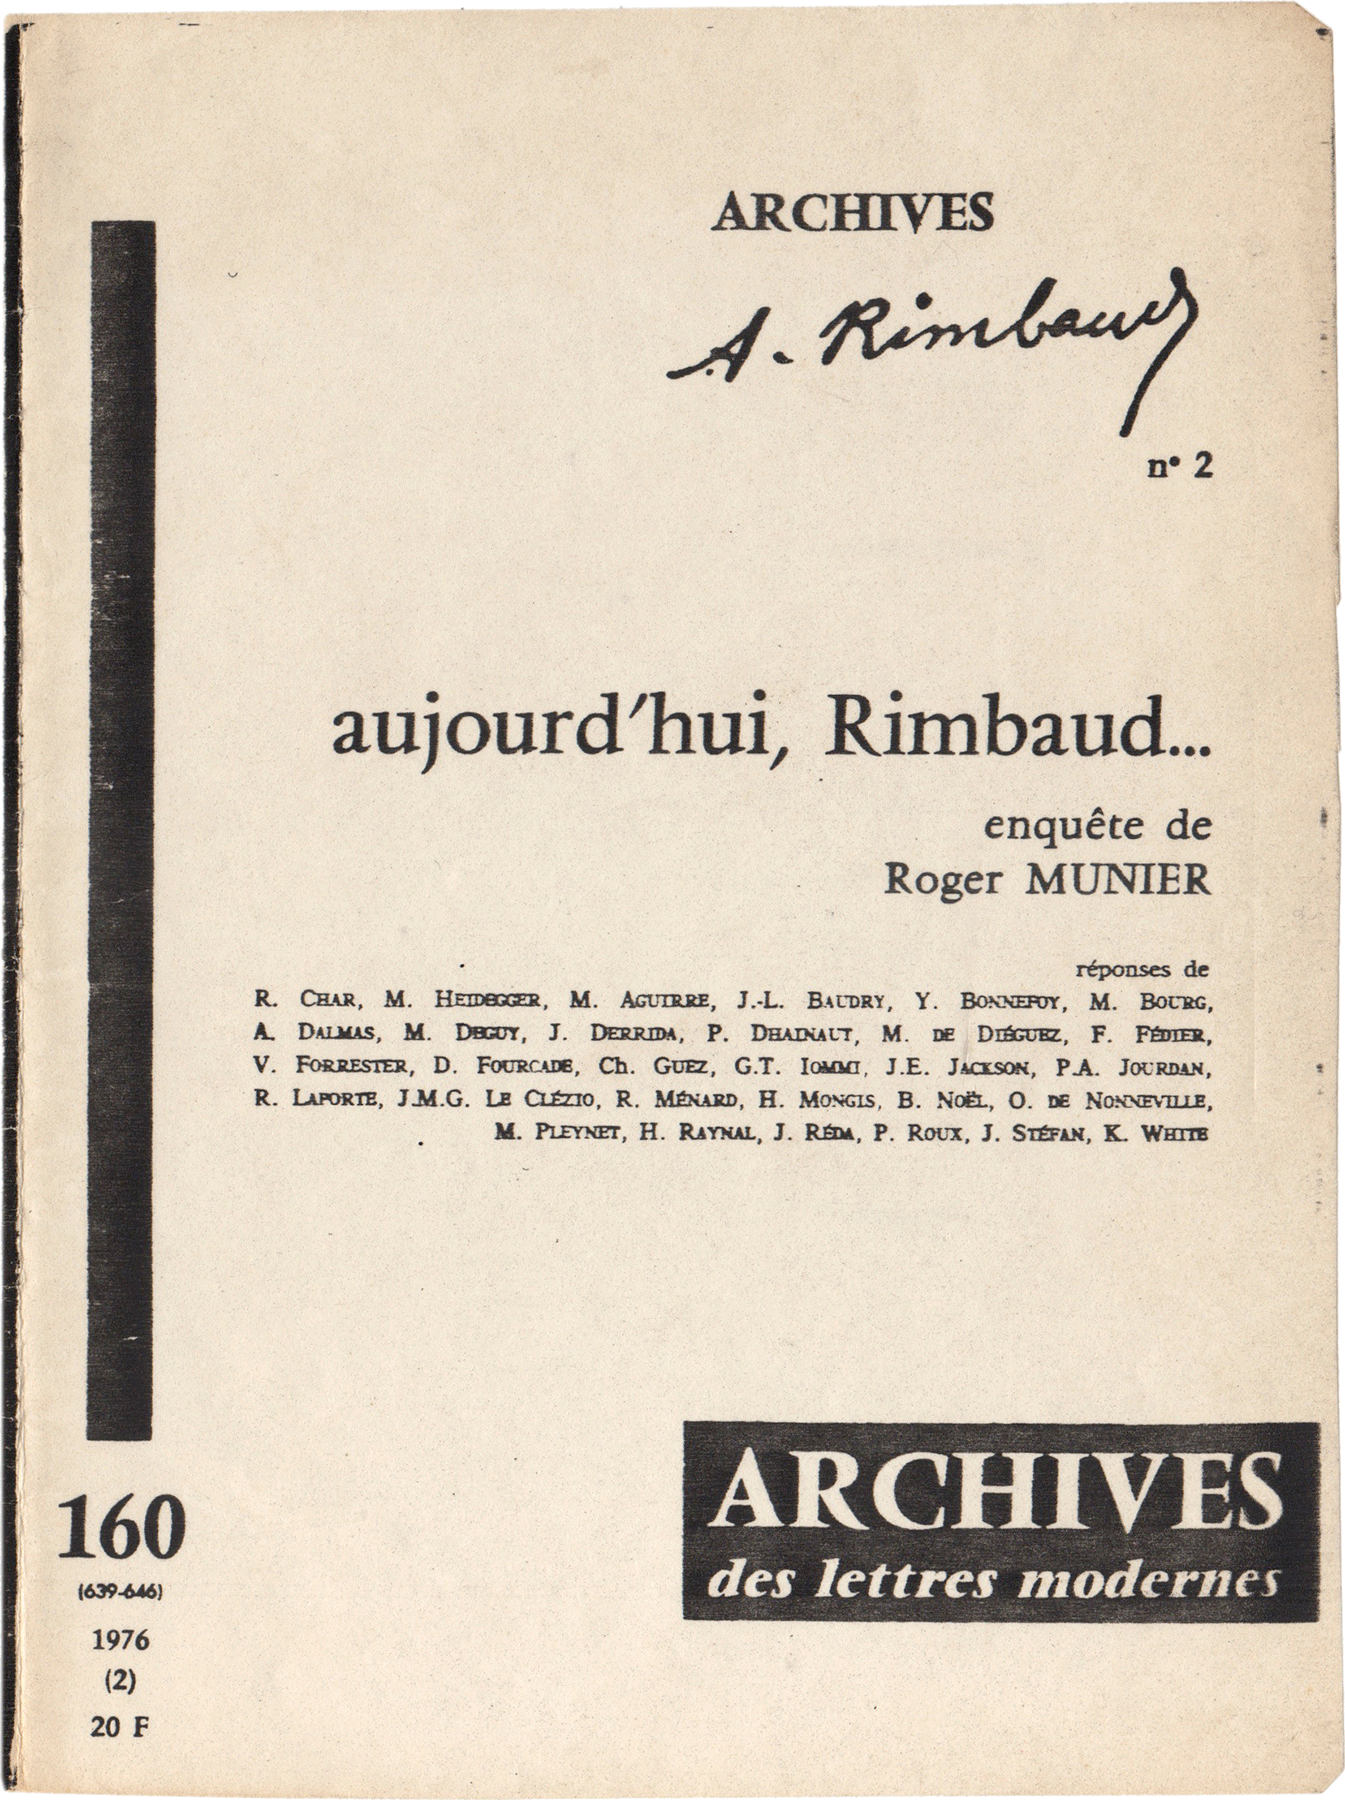 Aujourd’hui, Rimbaud...